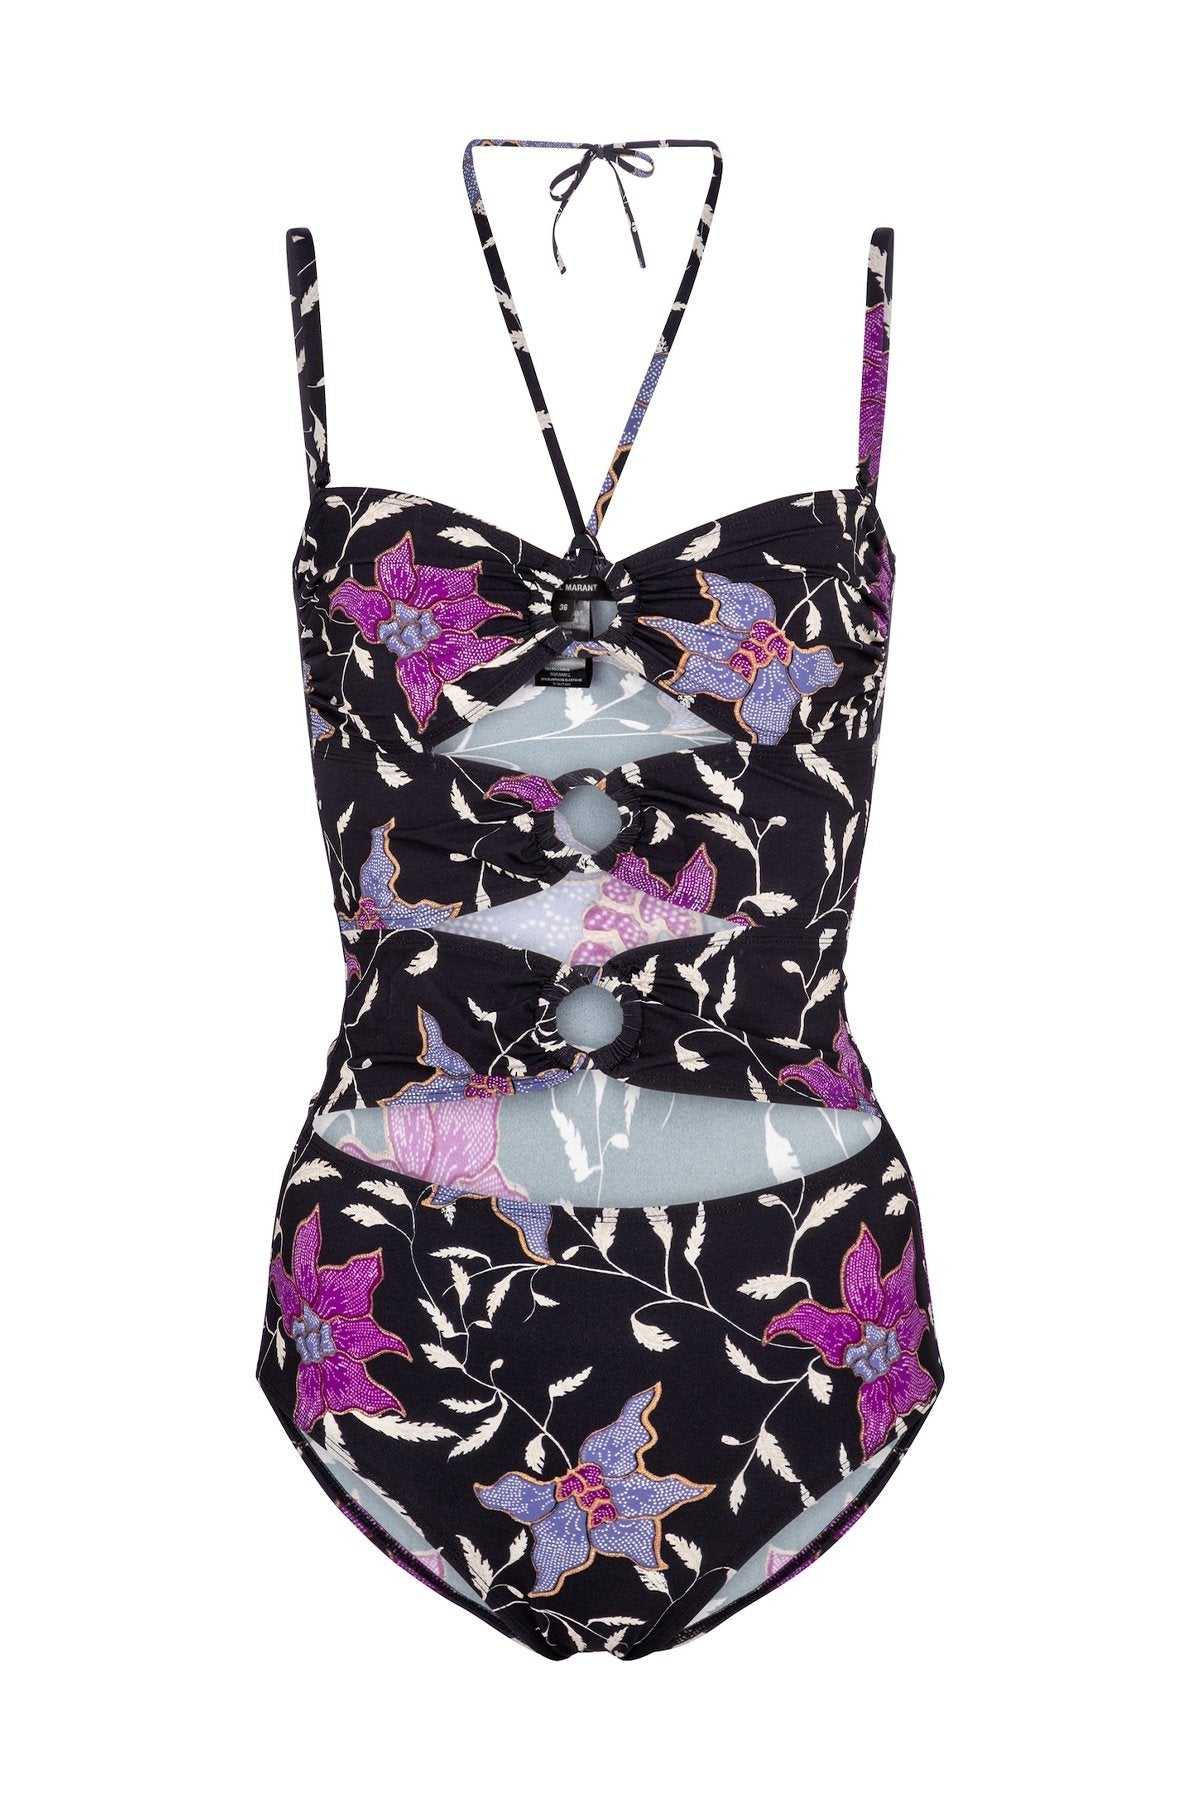 Stiza Swimsuit in Faded Night - shop-olivia.com